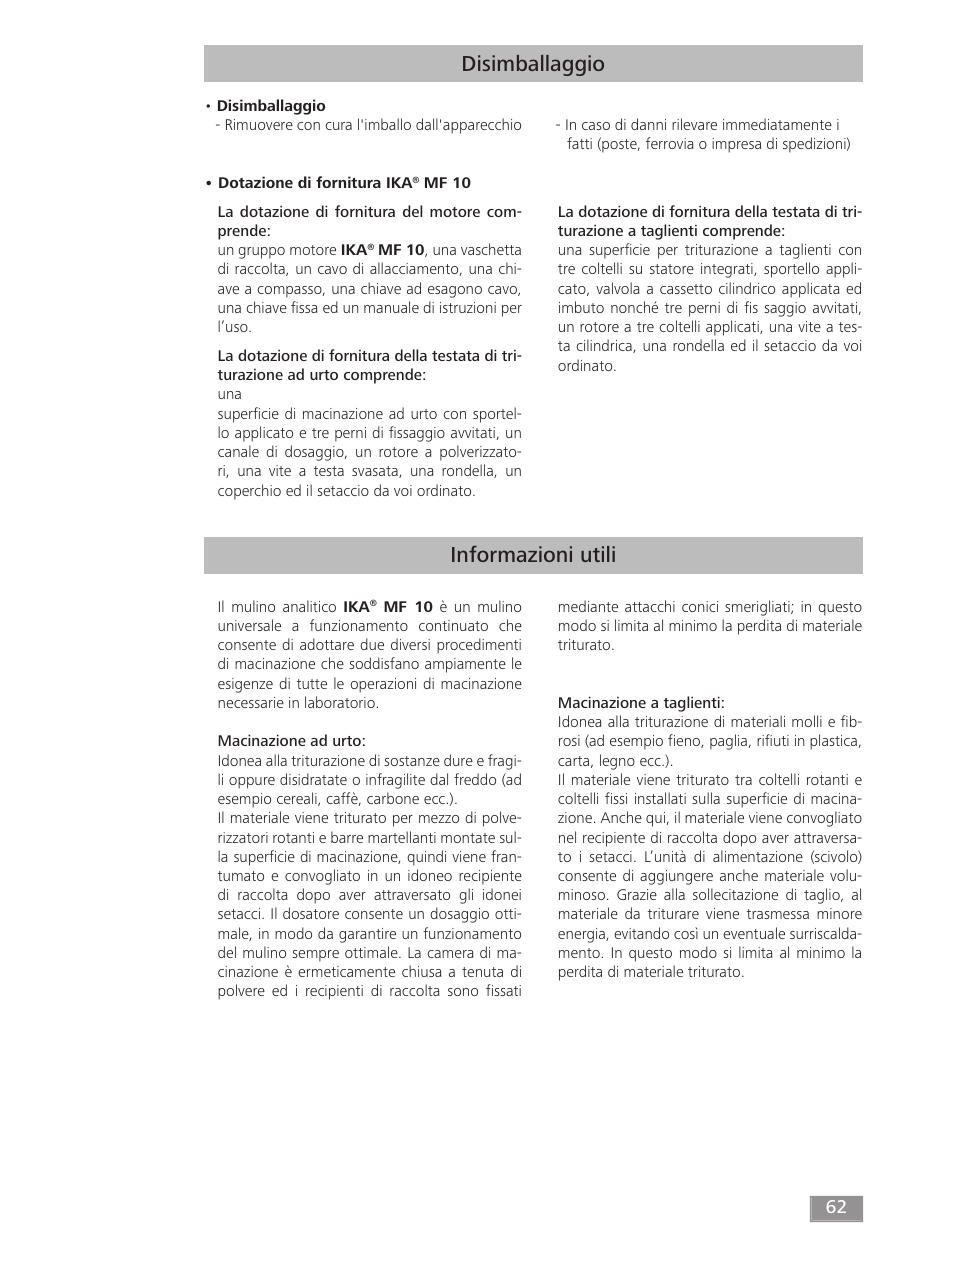 Disimballaggio informazioni utili | IKA MF 10 basic User Manual | Page 62 / 140